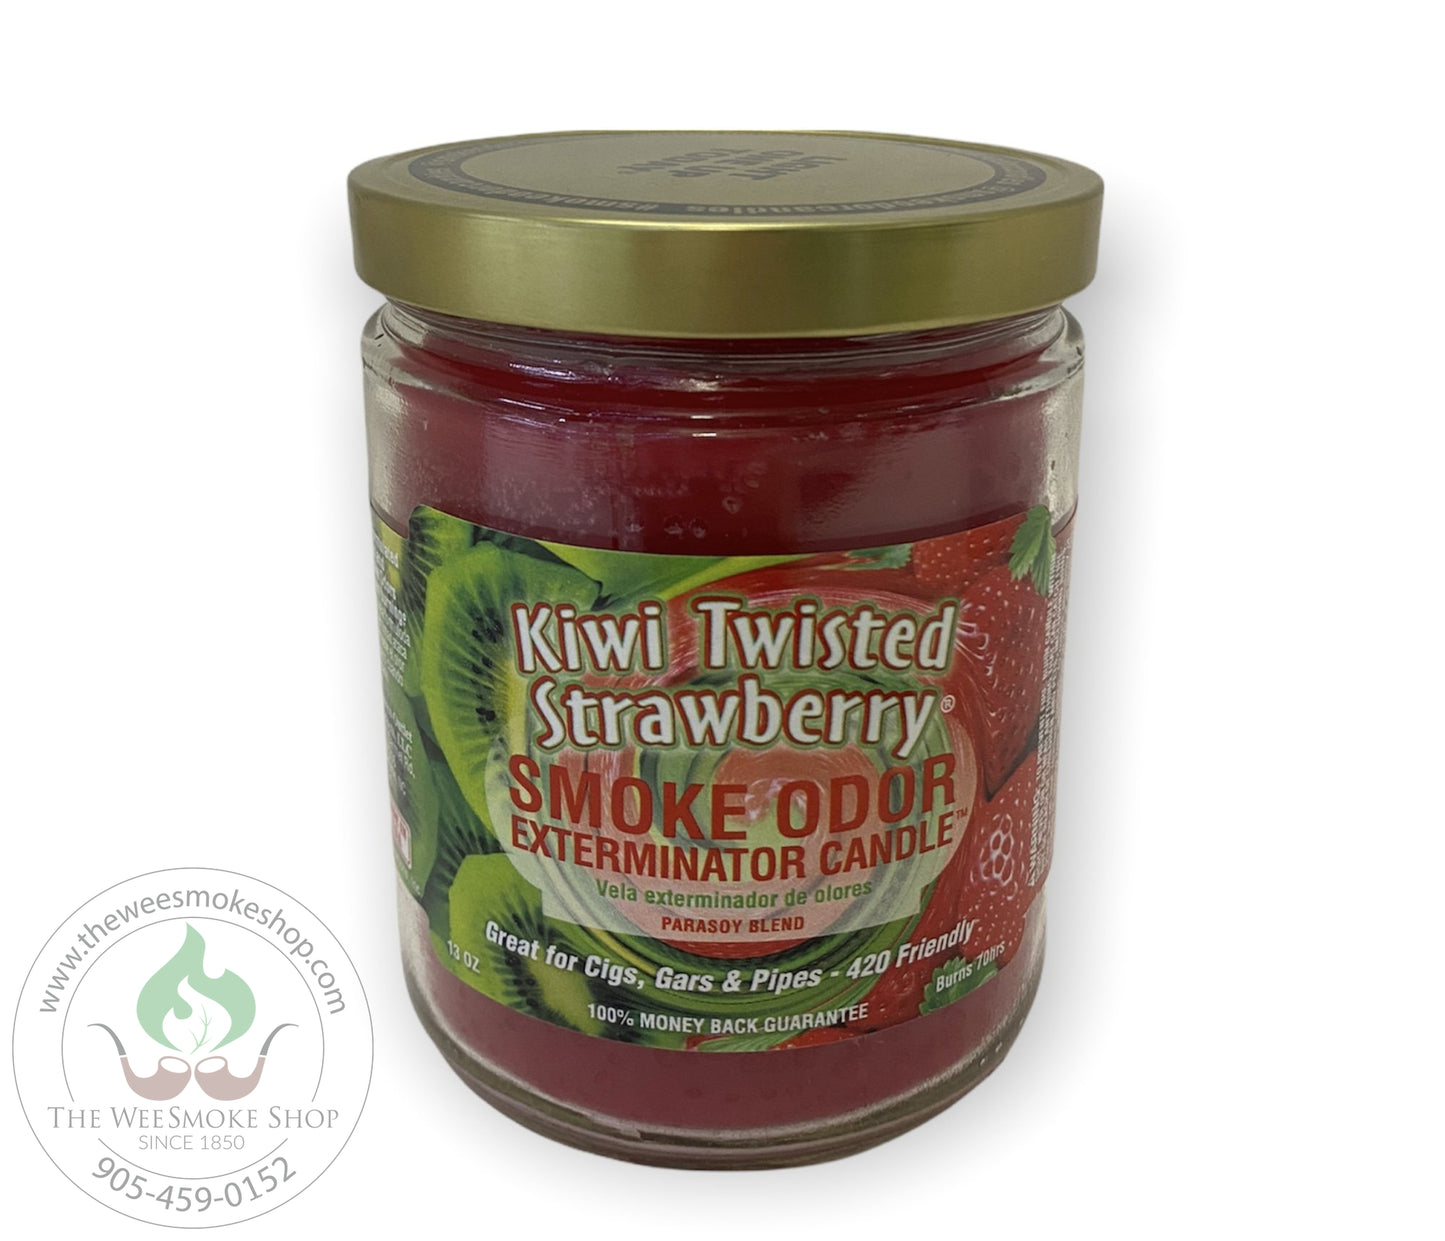 Kiwi Twisted Strawberry Smoke Odor Exterminator Candle - Wee Smoke Shop